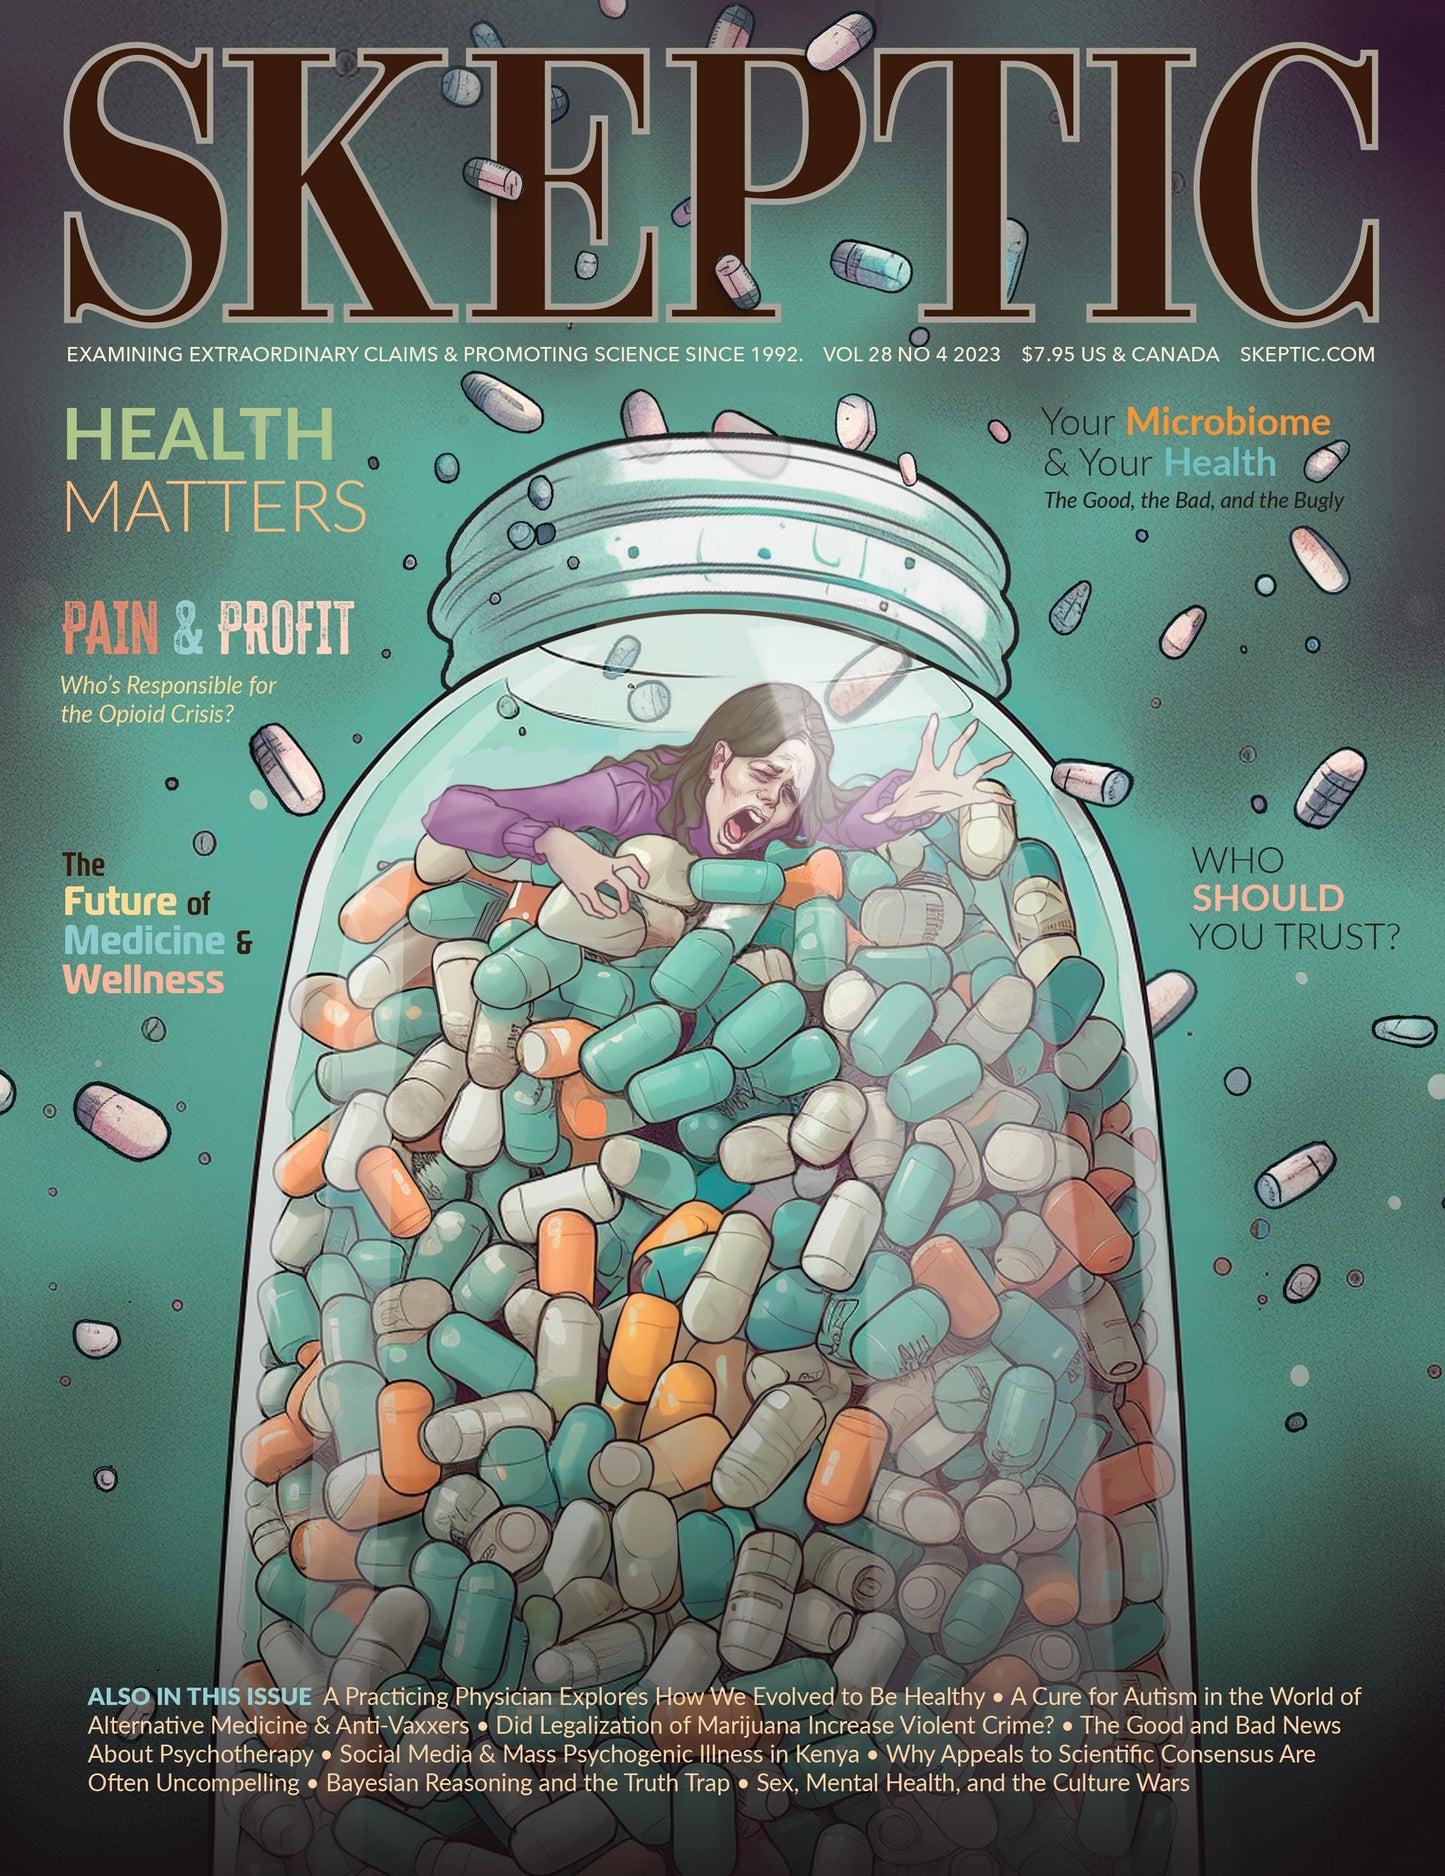 Health Matters (Skeptic Magazine Vol. 28 No. 4)